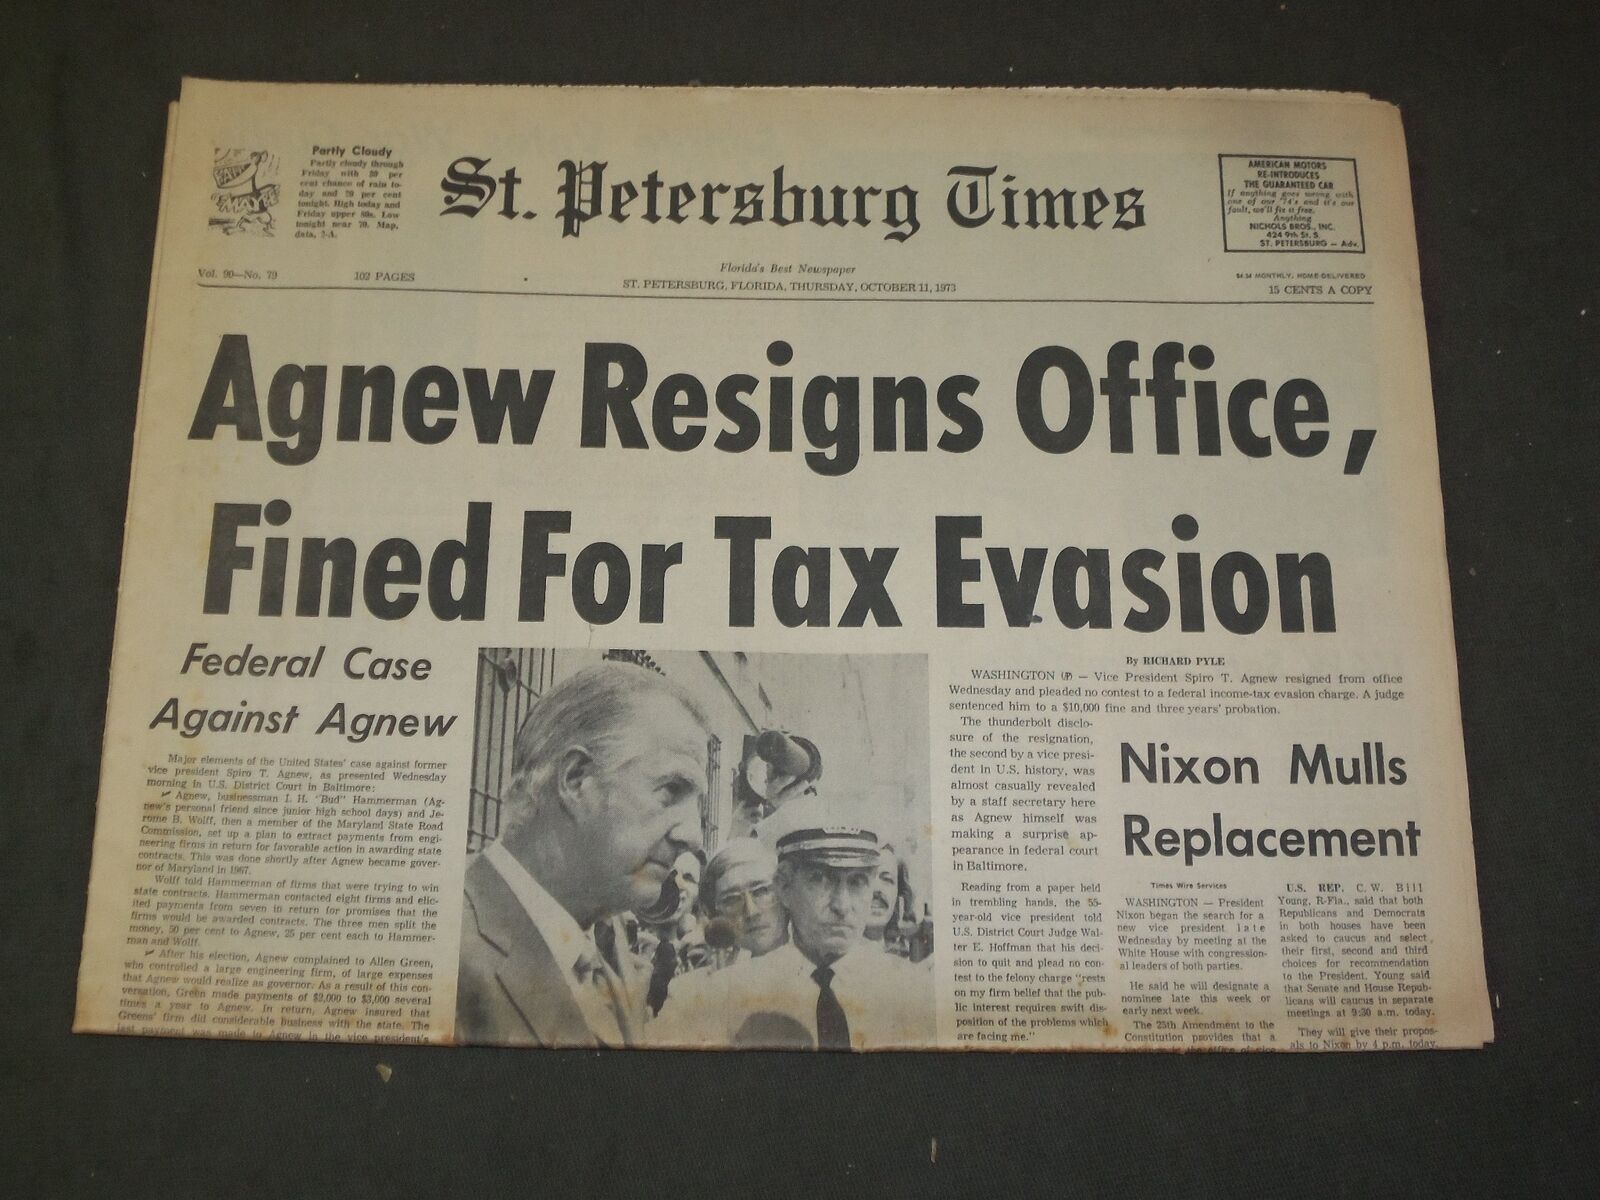 1973 OCTOBER 11 ST. PETERSBURG TIMES NEWSPAPER - SPIRO AGNEW RESIGNS - NP 3328